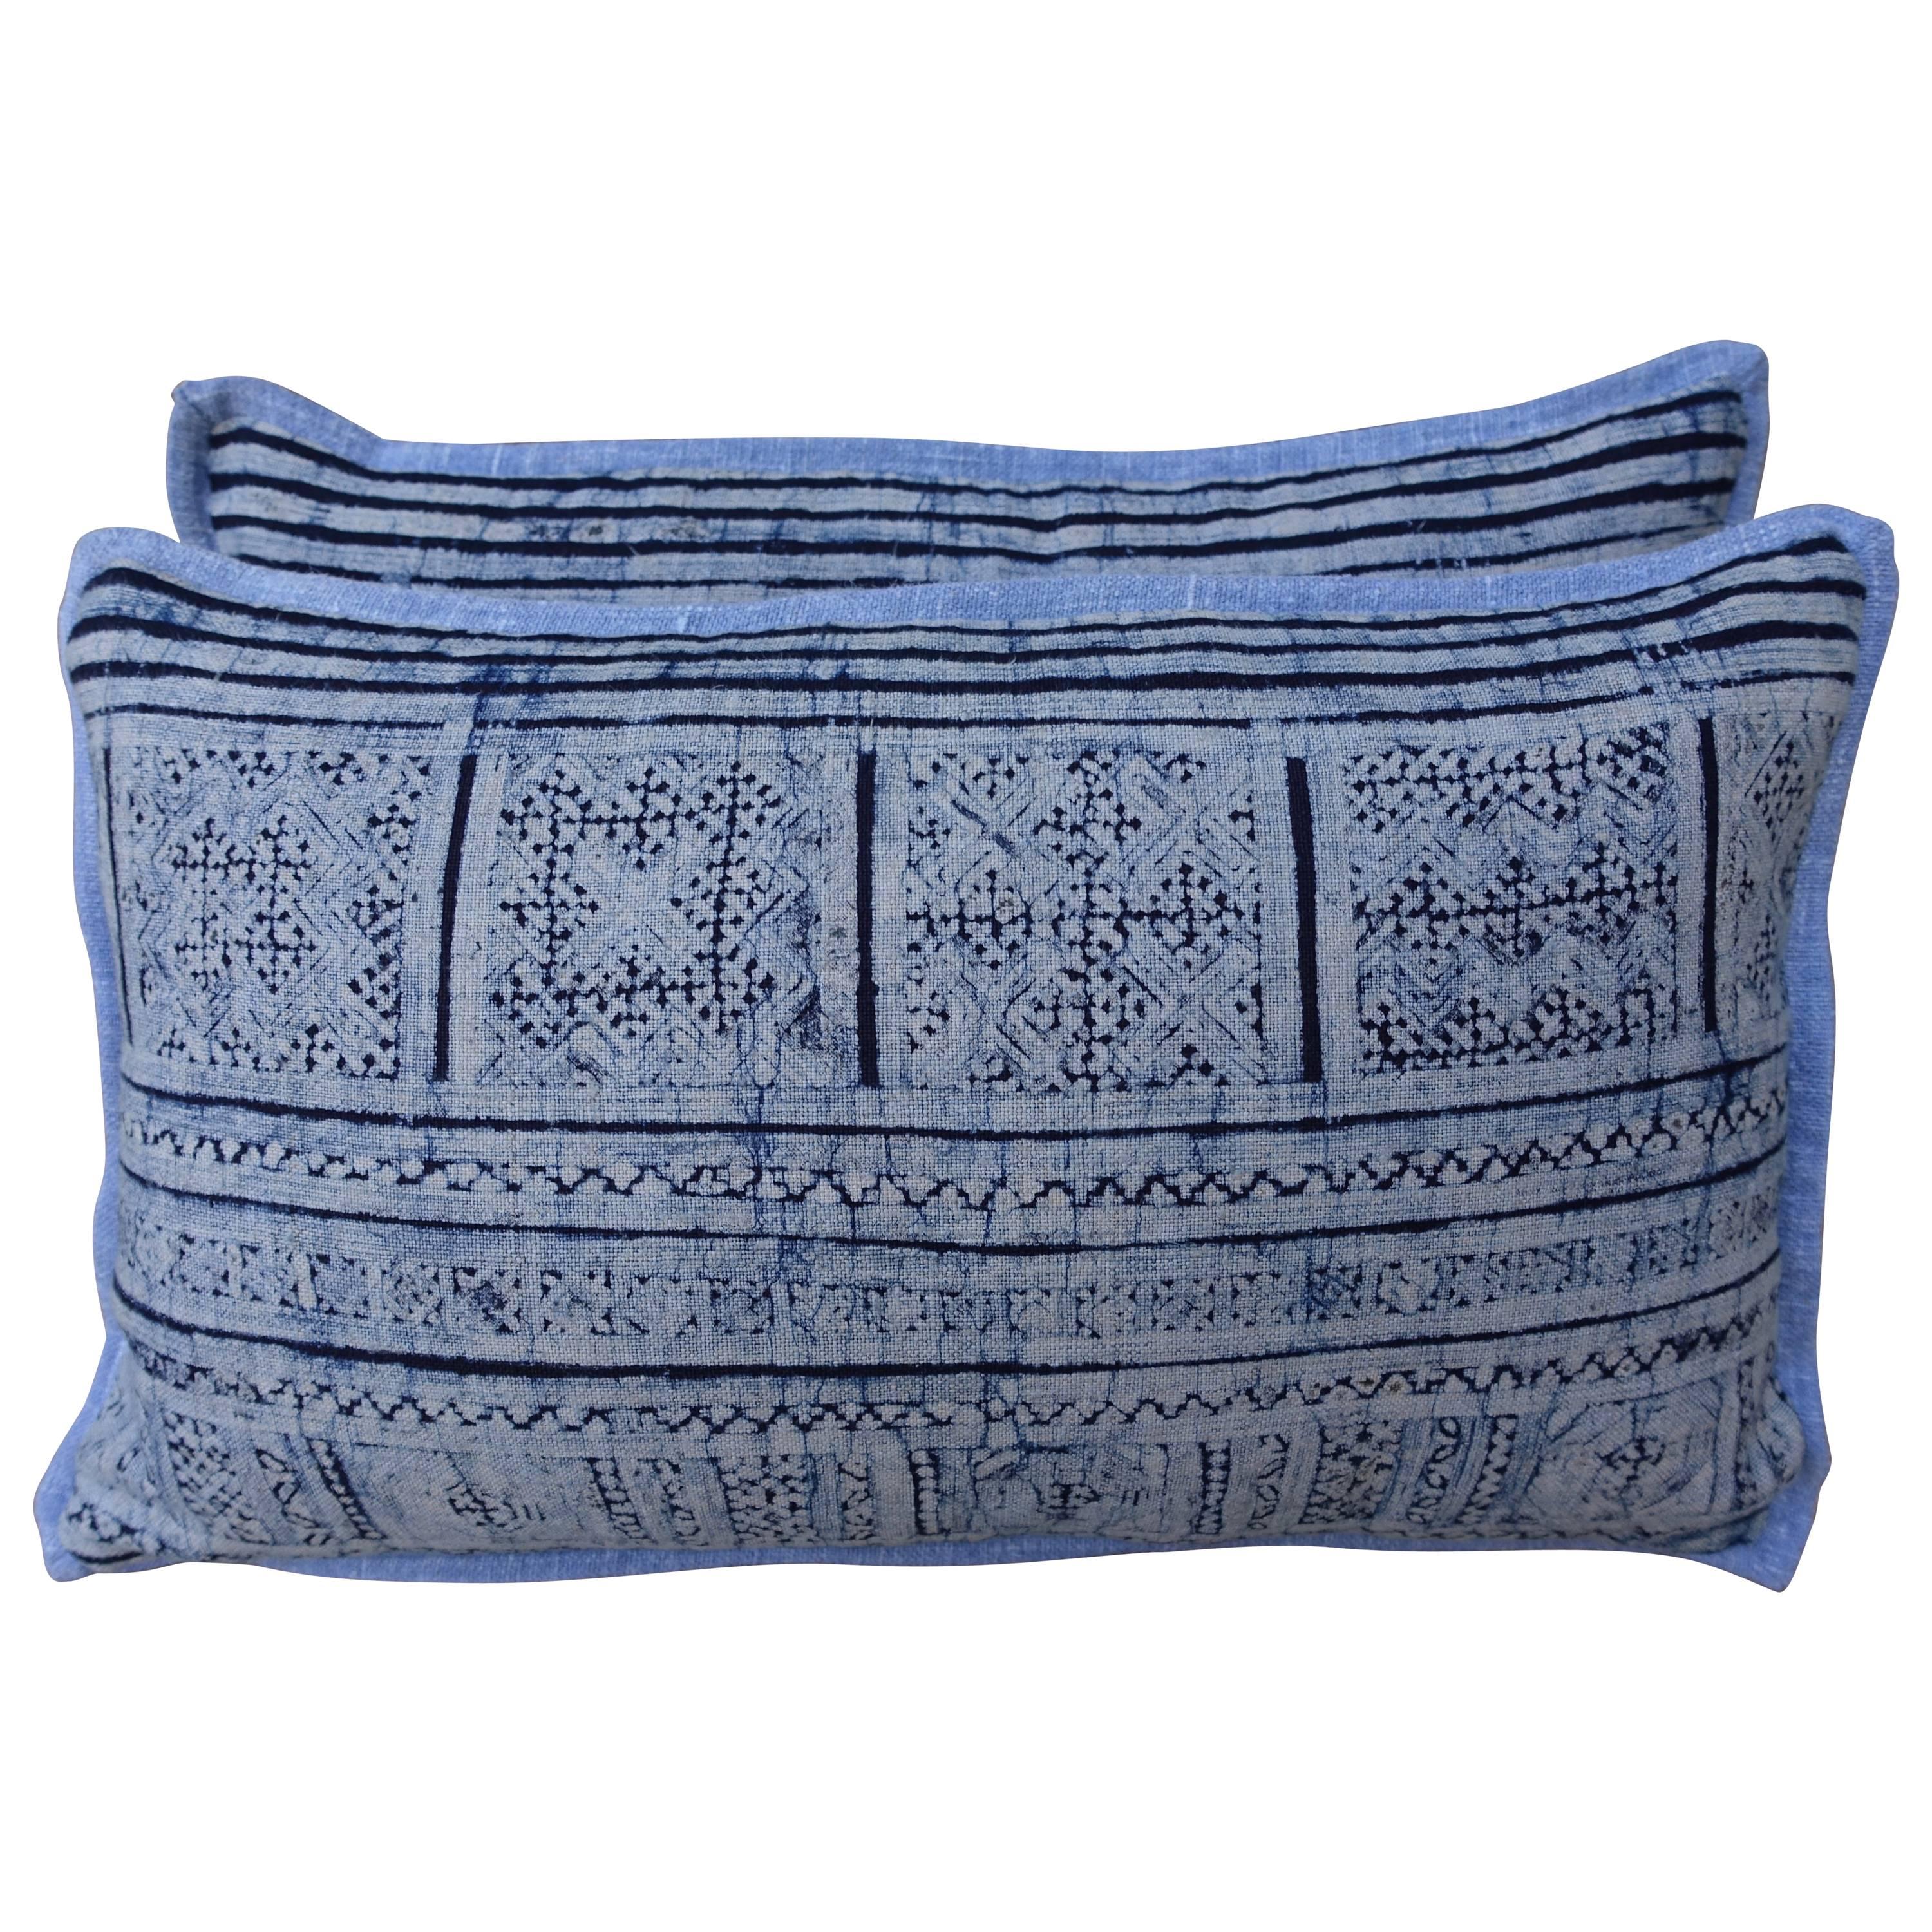 Navy and Light Blue Patterned Batik Pillows, Pair